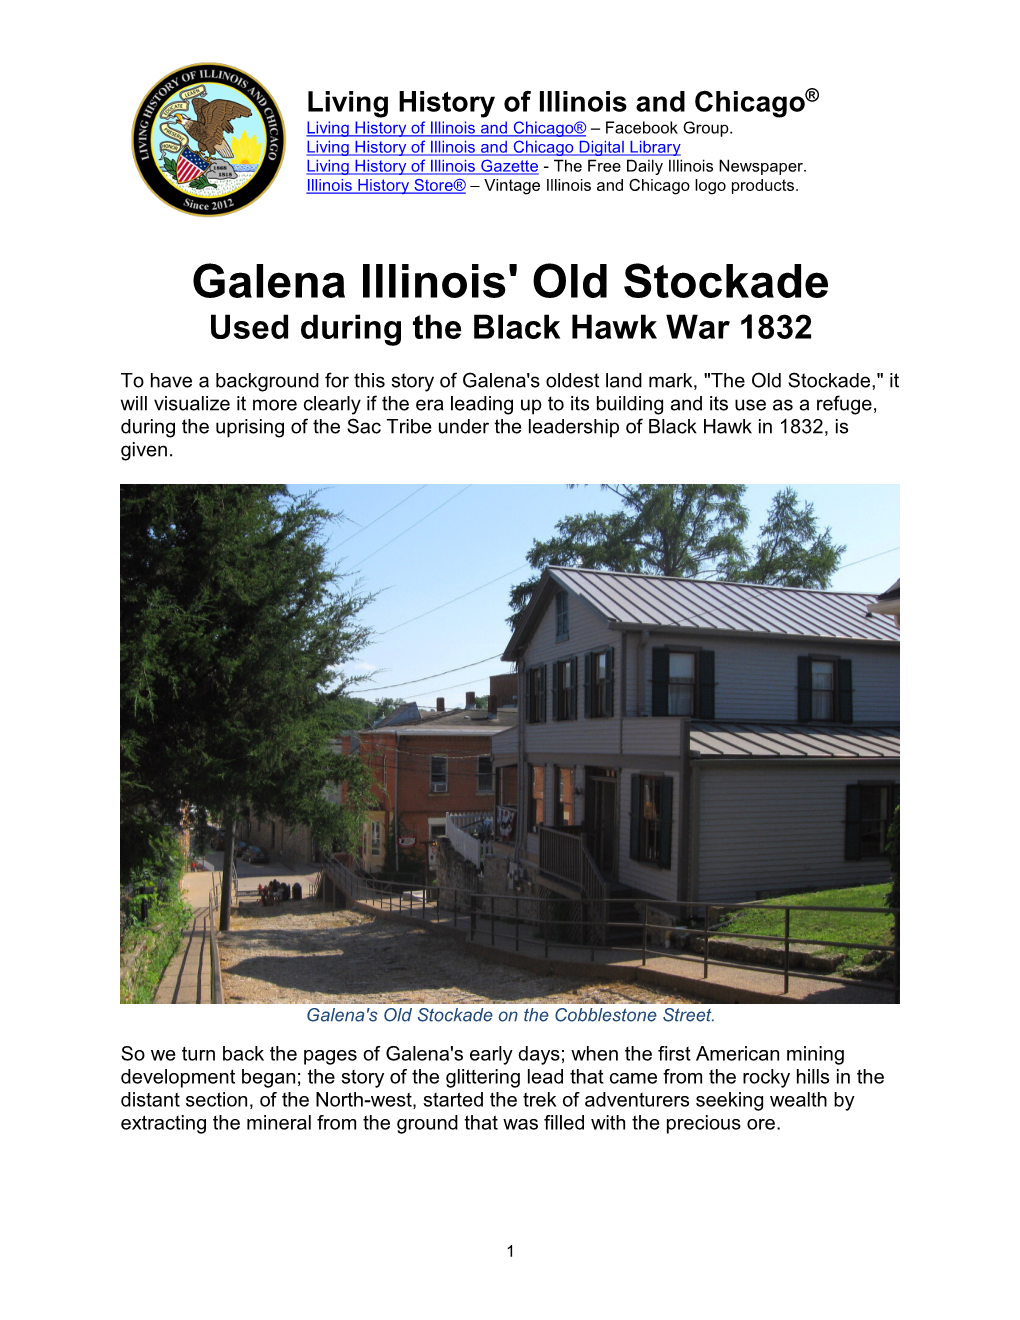 Galena Illinois' Old Stockade, Used During the Black Hawk War 1832